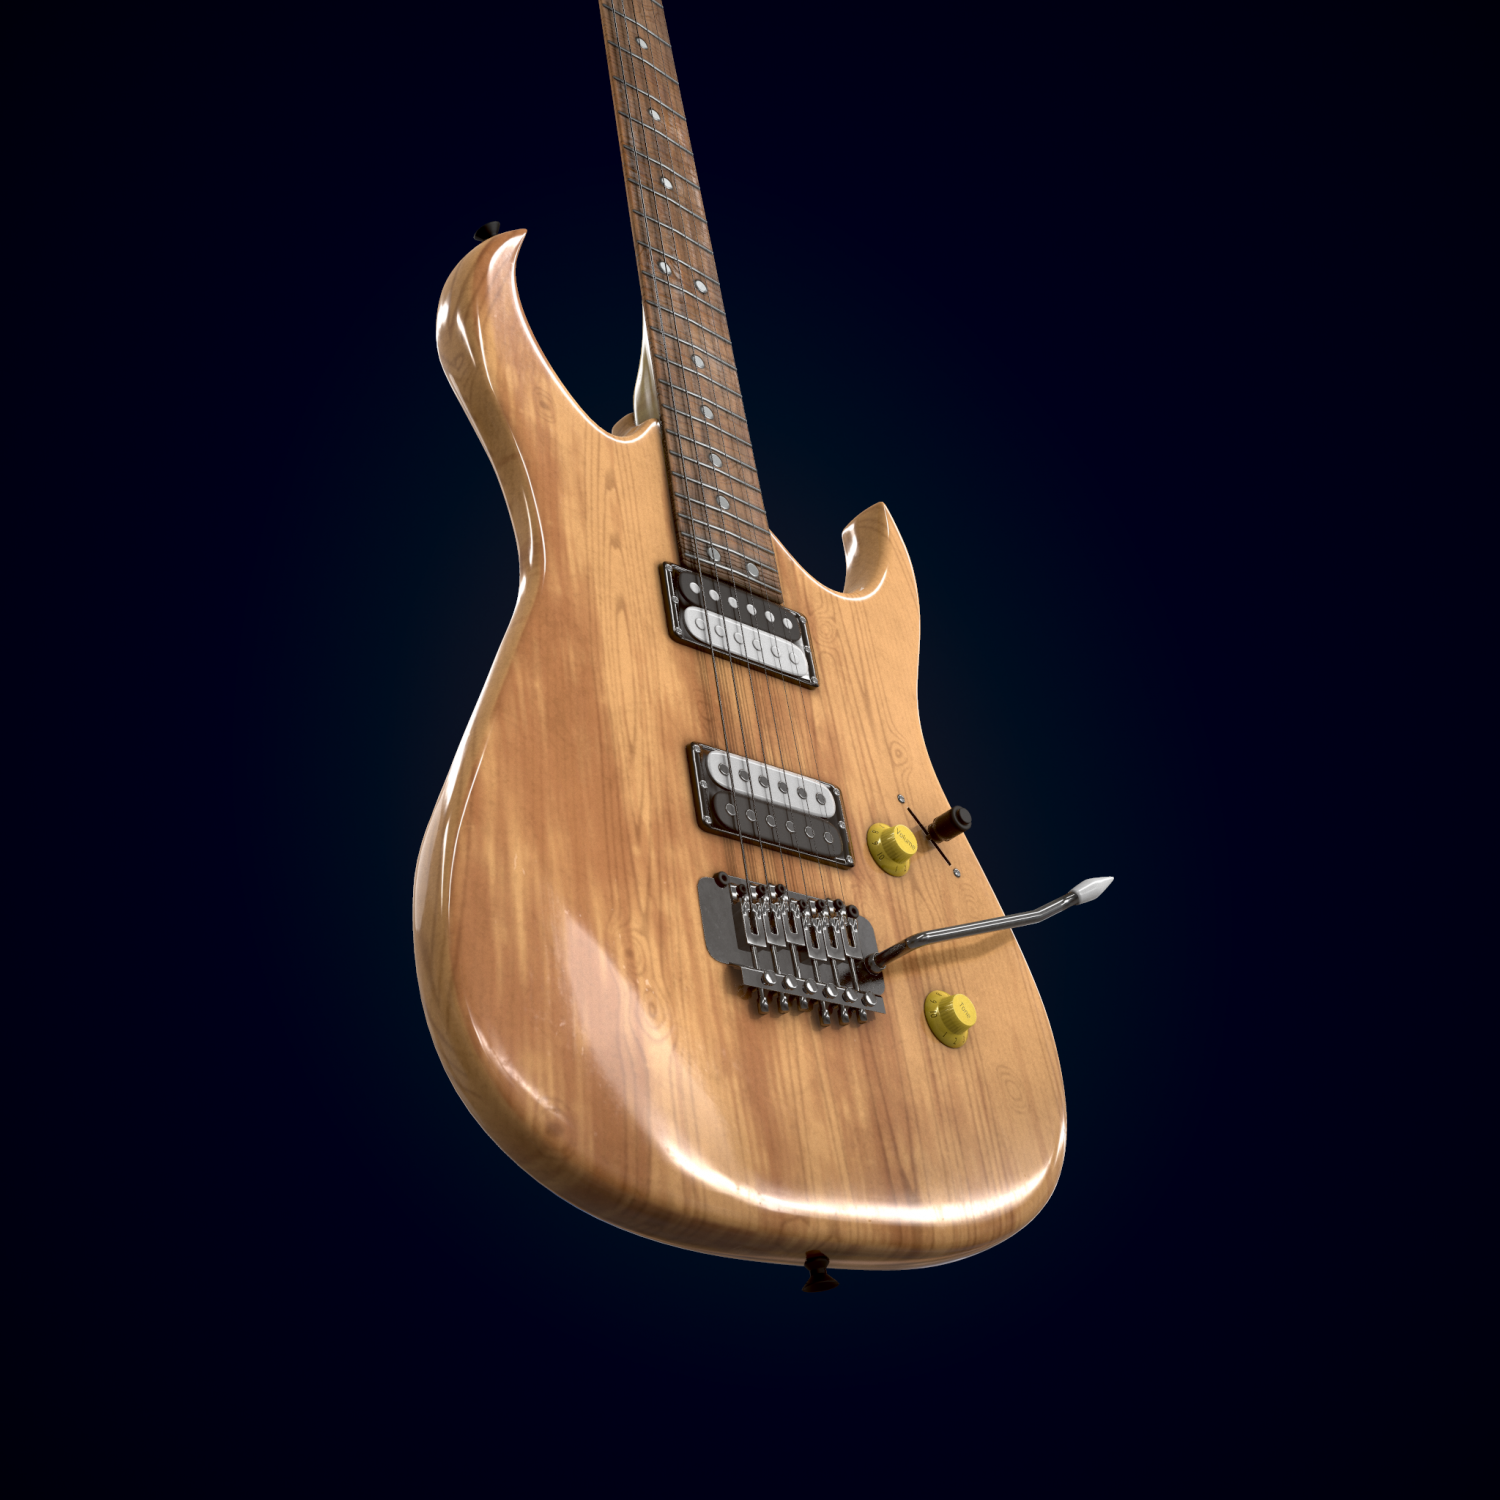 3д модель гитары. Электрогитара homage HEG-382.